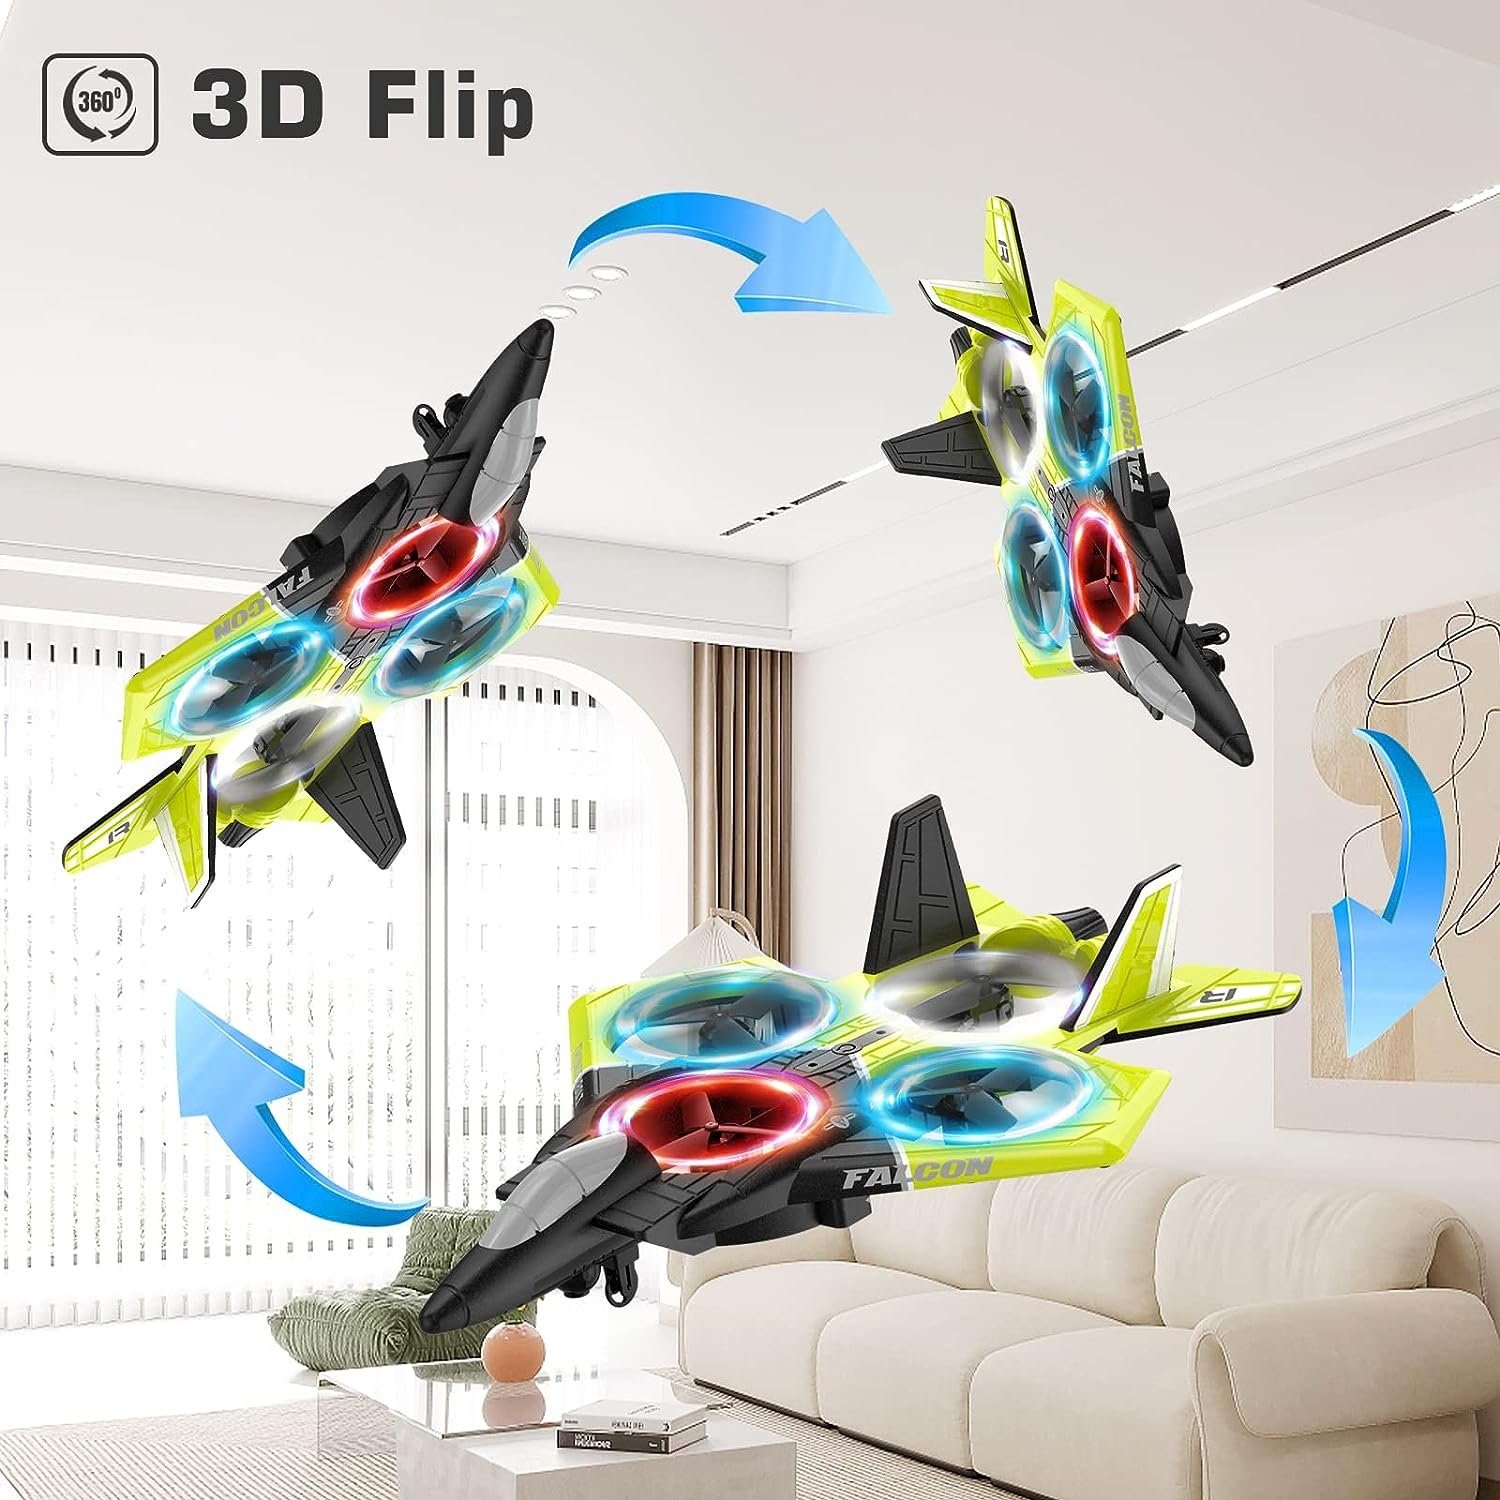 Kinder/Anfänger) 2 Batterien, (Stunt Flip, Fighter 360° Quadcopter, le-idea Drohne